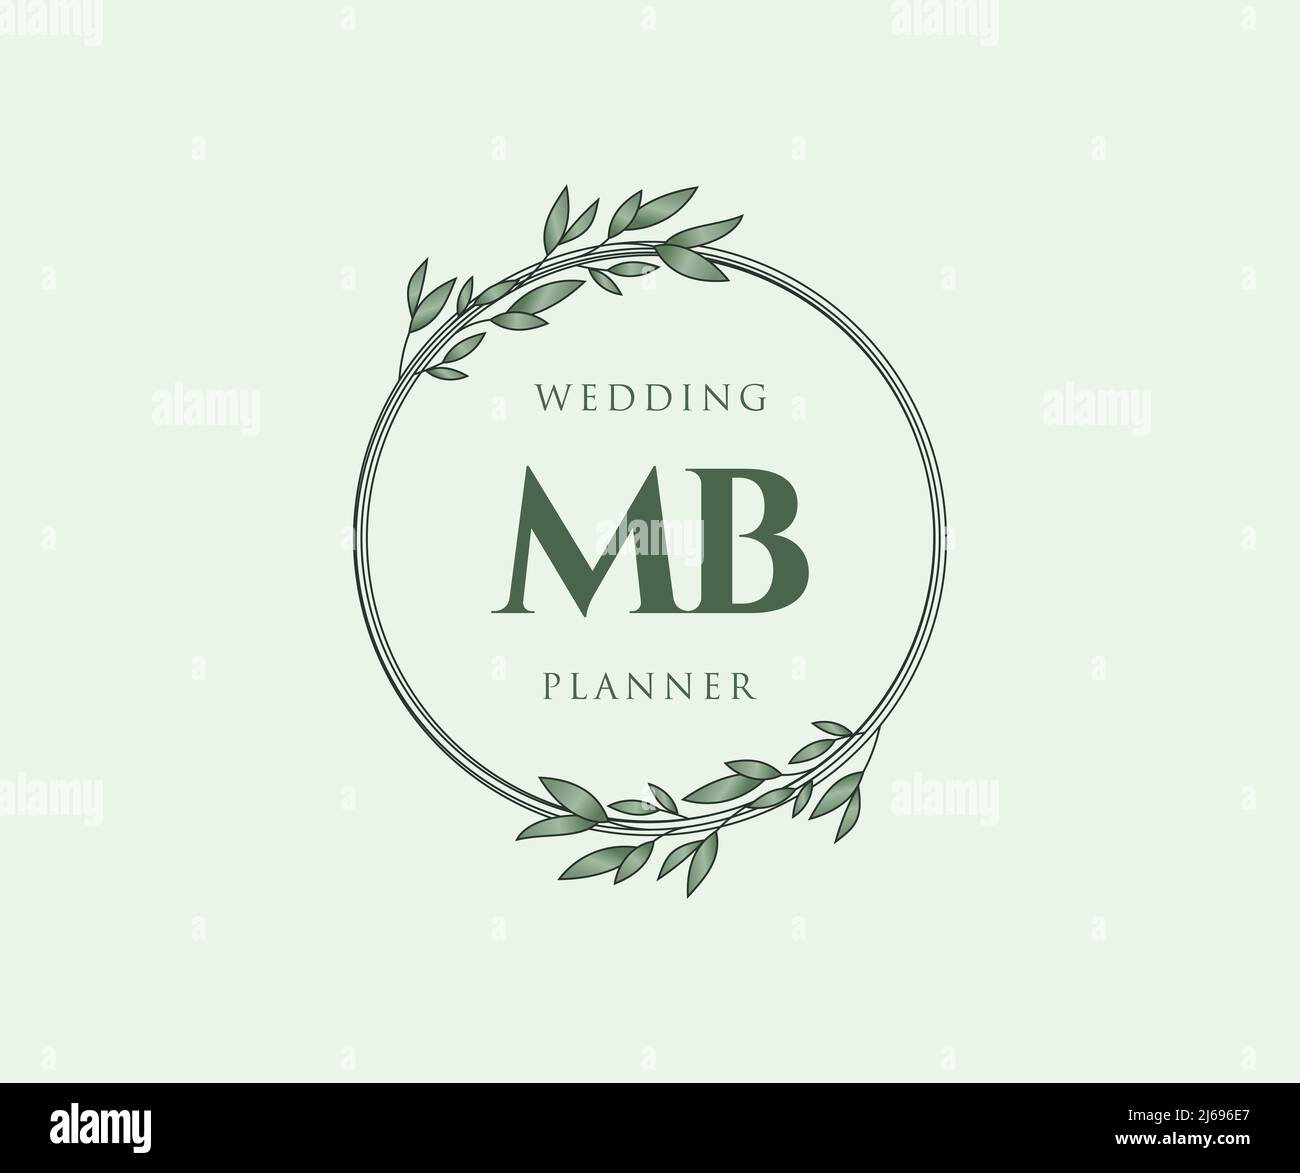 Mb initial wedding monogram logo Royalty Free Vector Image